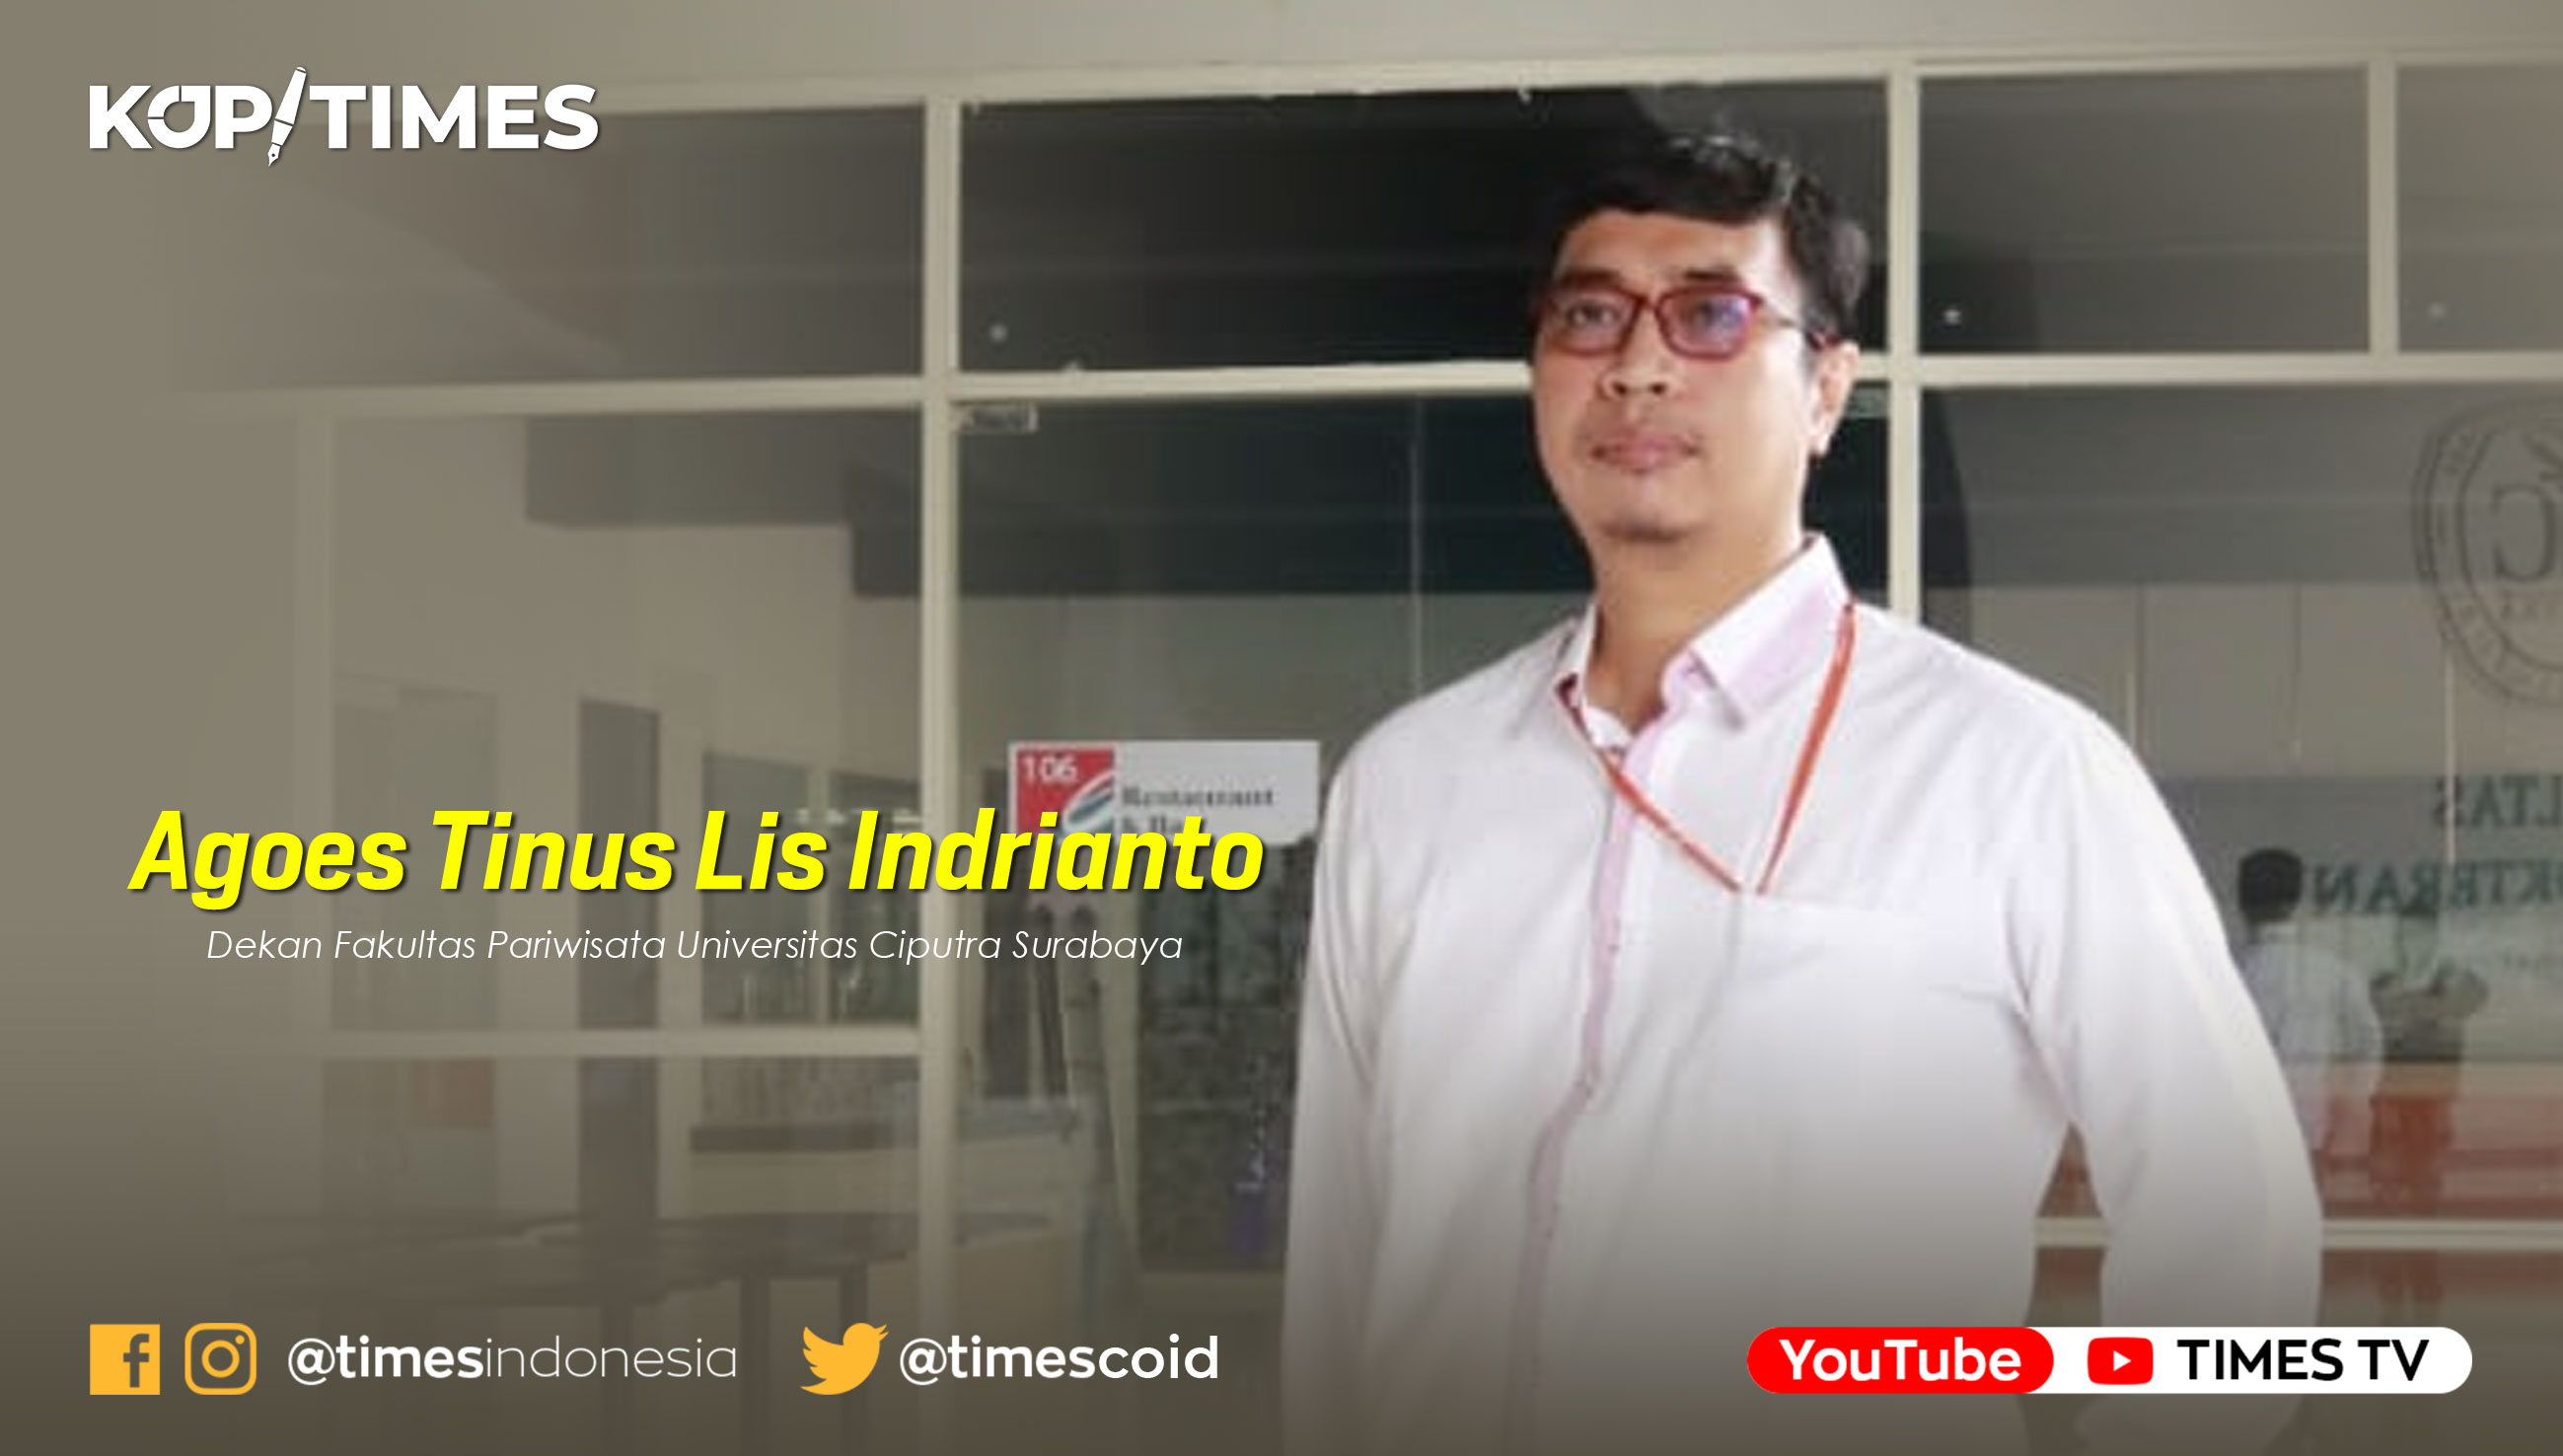 Agoes Tinus Lis Indrianto, S.S.,M.Tourism.,Ph.D, Dekan Fakultas Pariwisata Universitas Ciputra Surabaya.